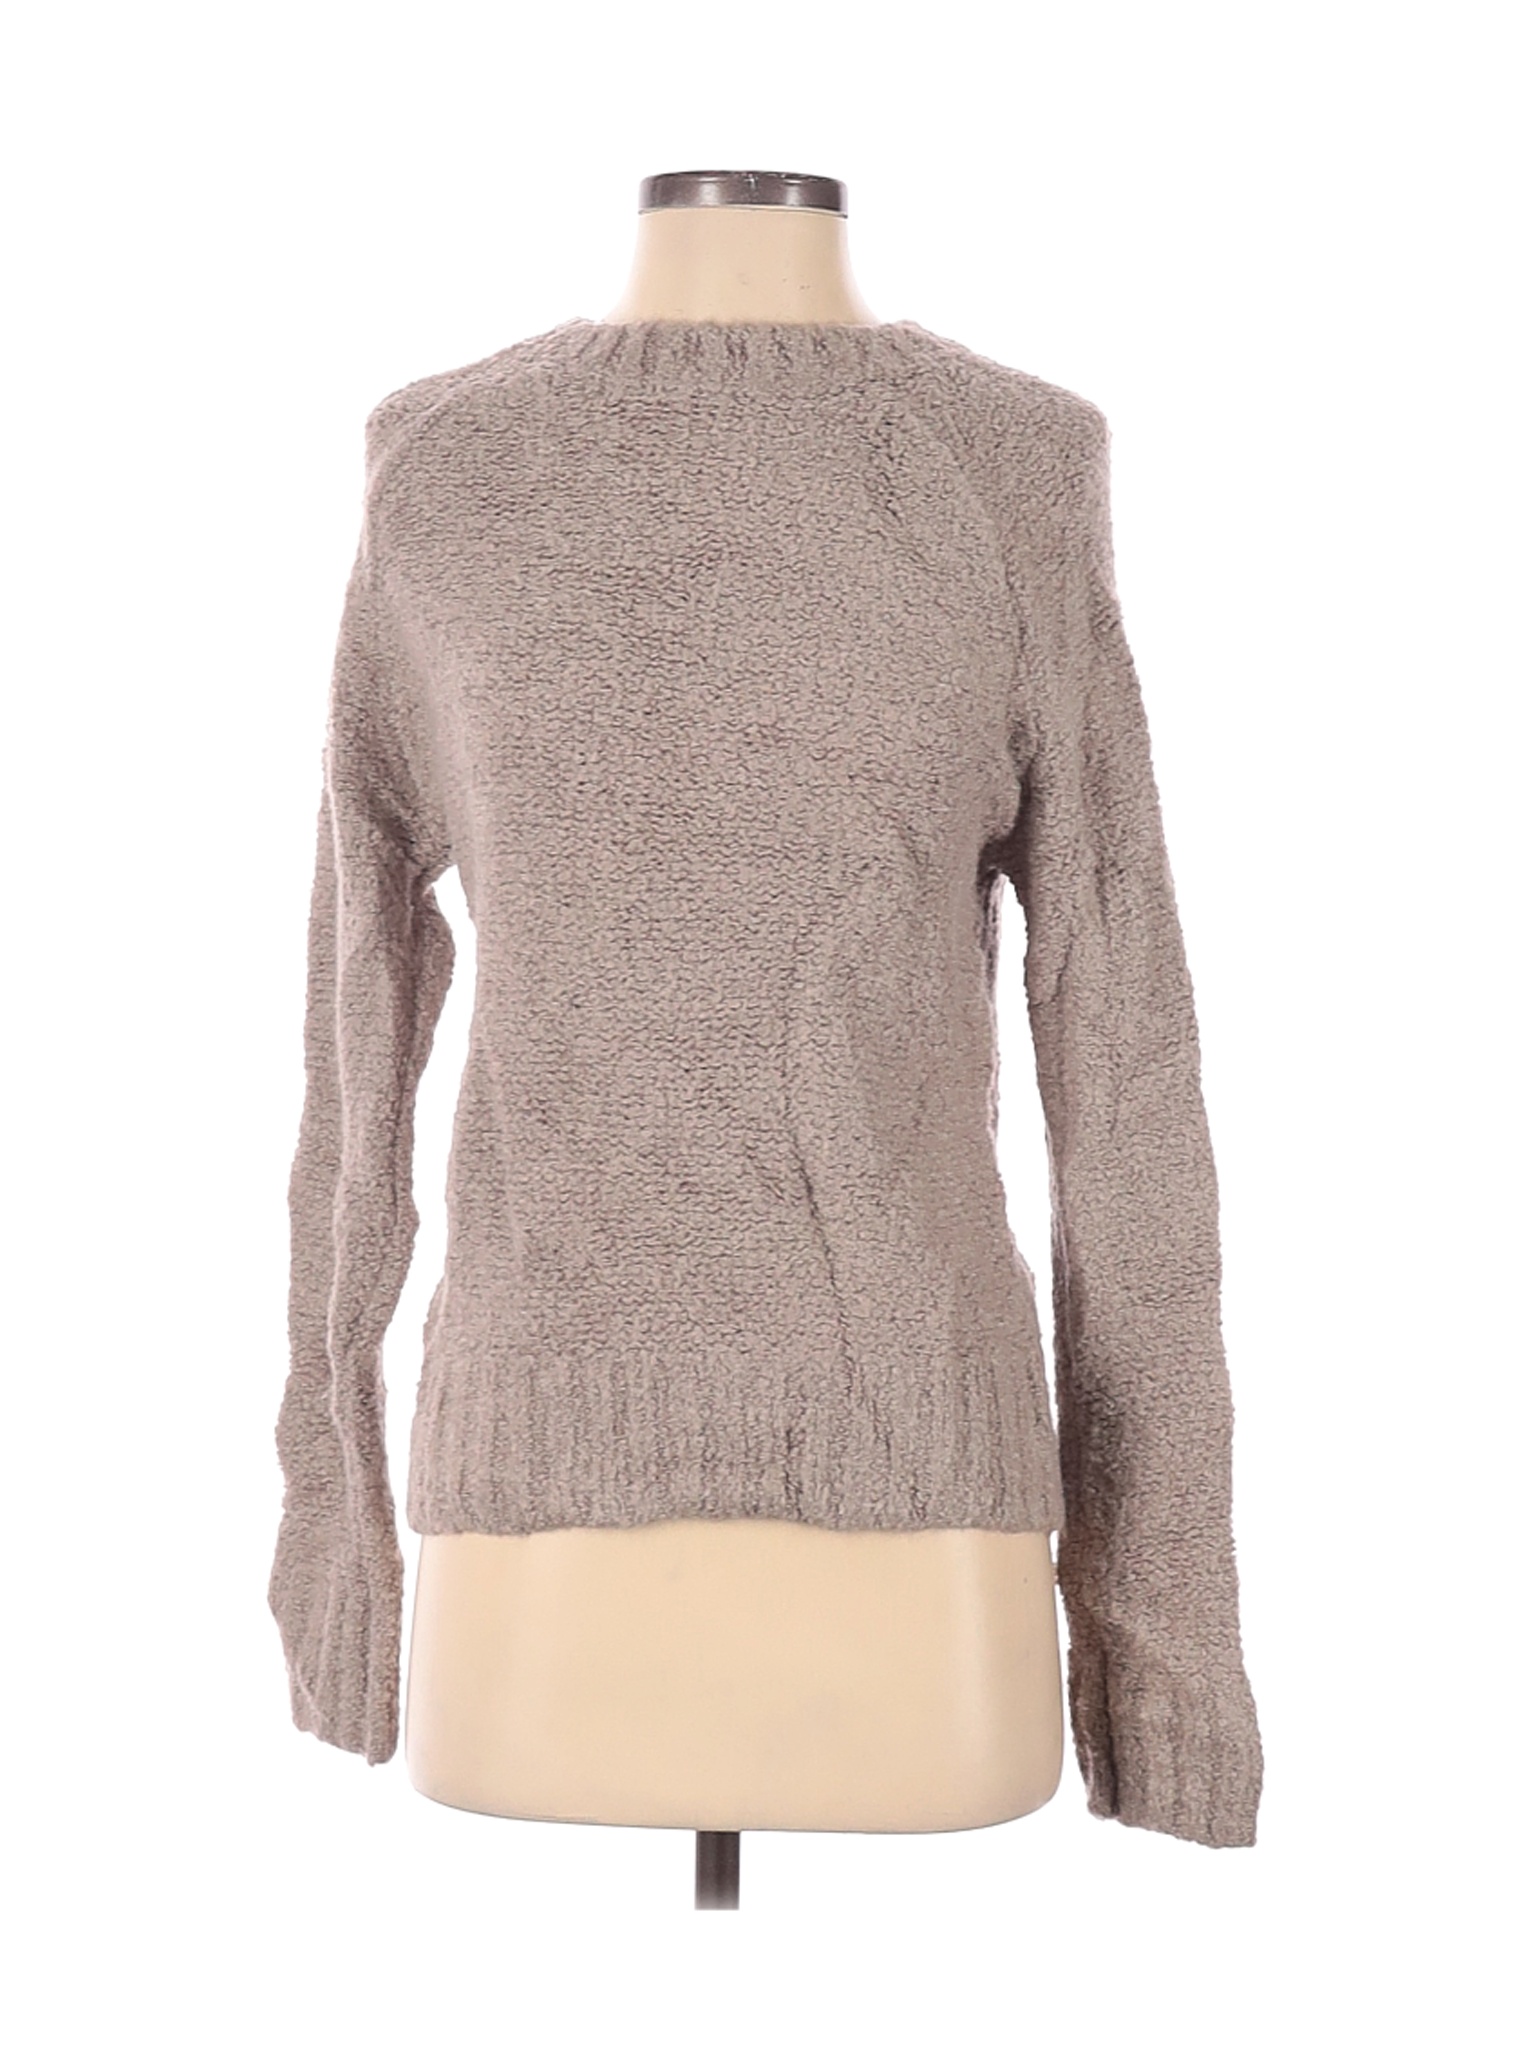 Primark Women Gray Pullover Sweater XS | eBay